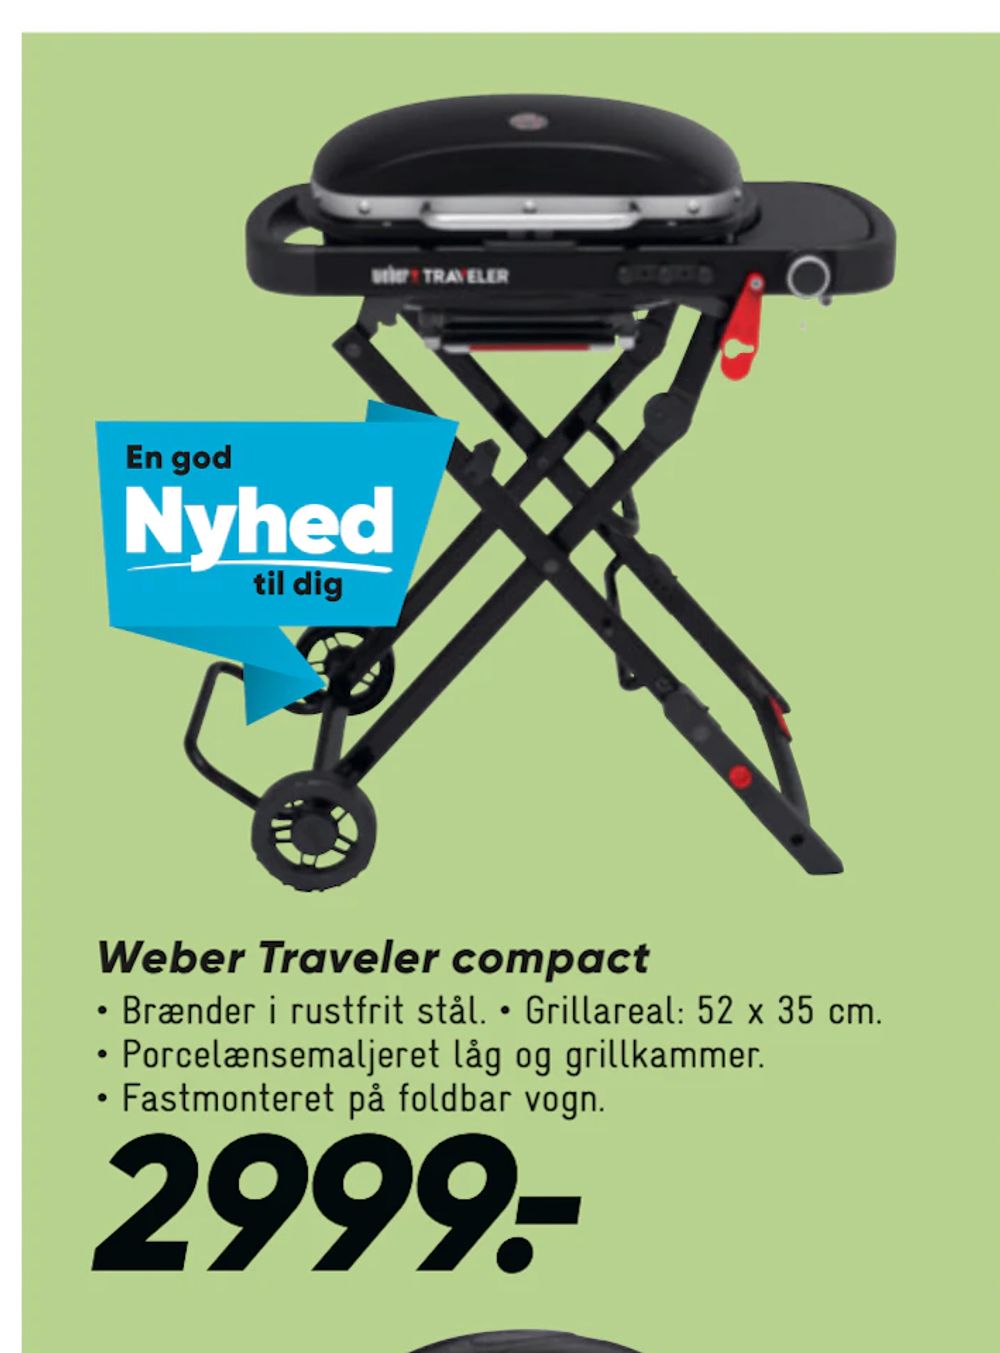 Tilbud på Weber Traveler compact fra Bilka til 2.999 kr.